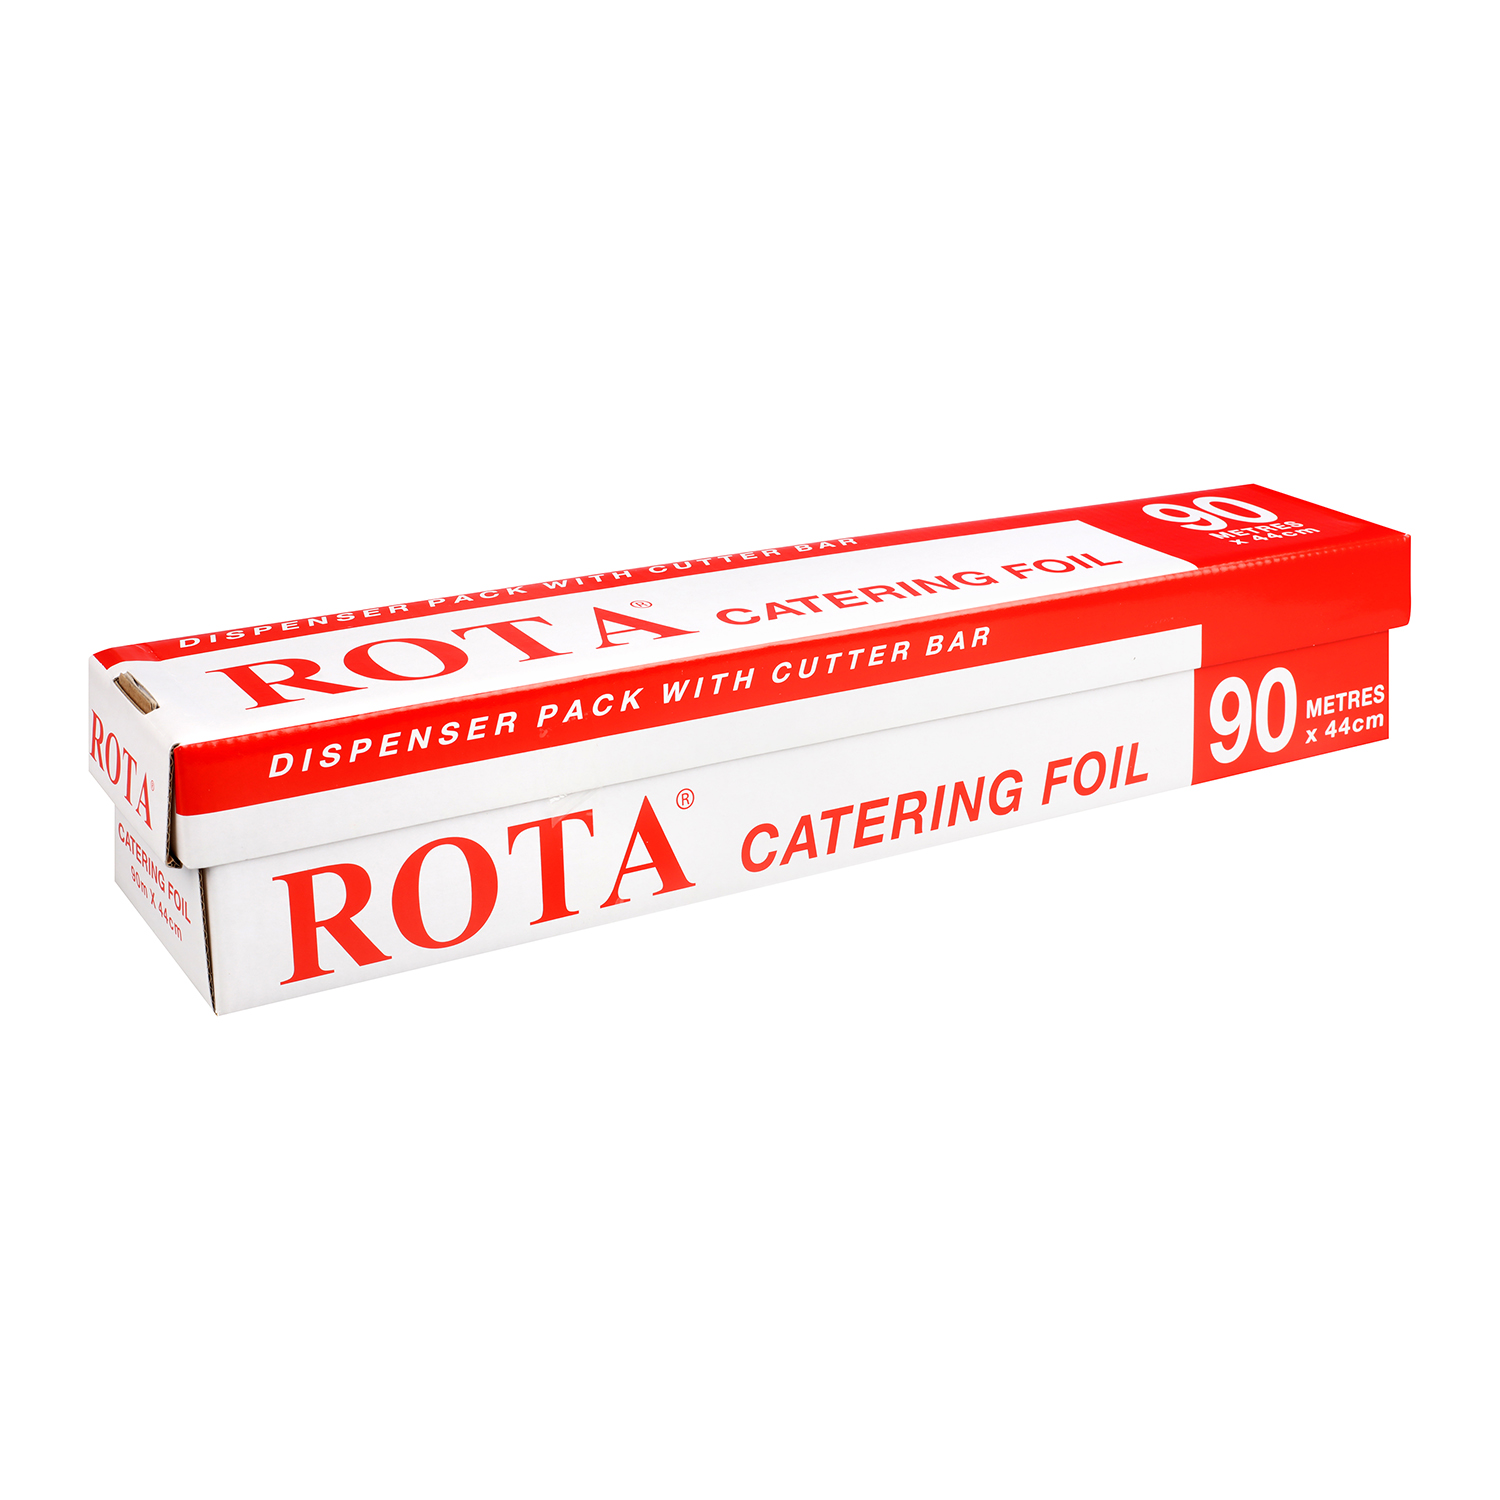 Rota Catering Foil 90M